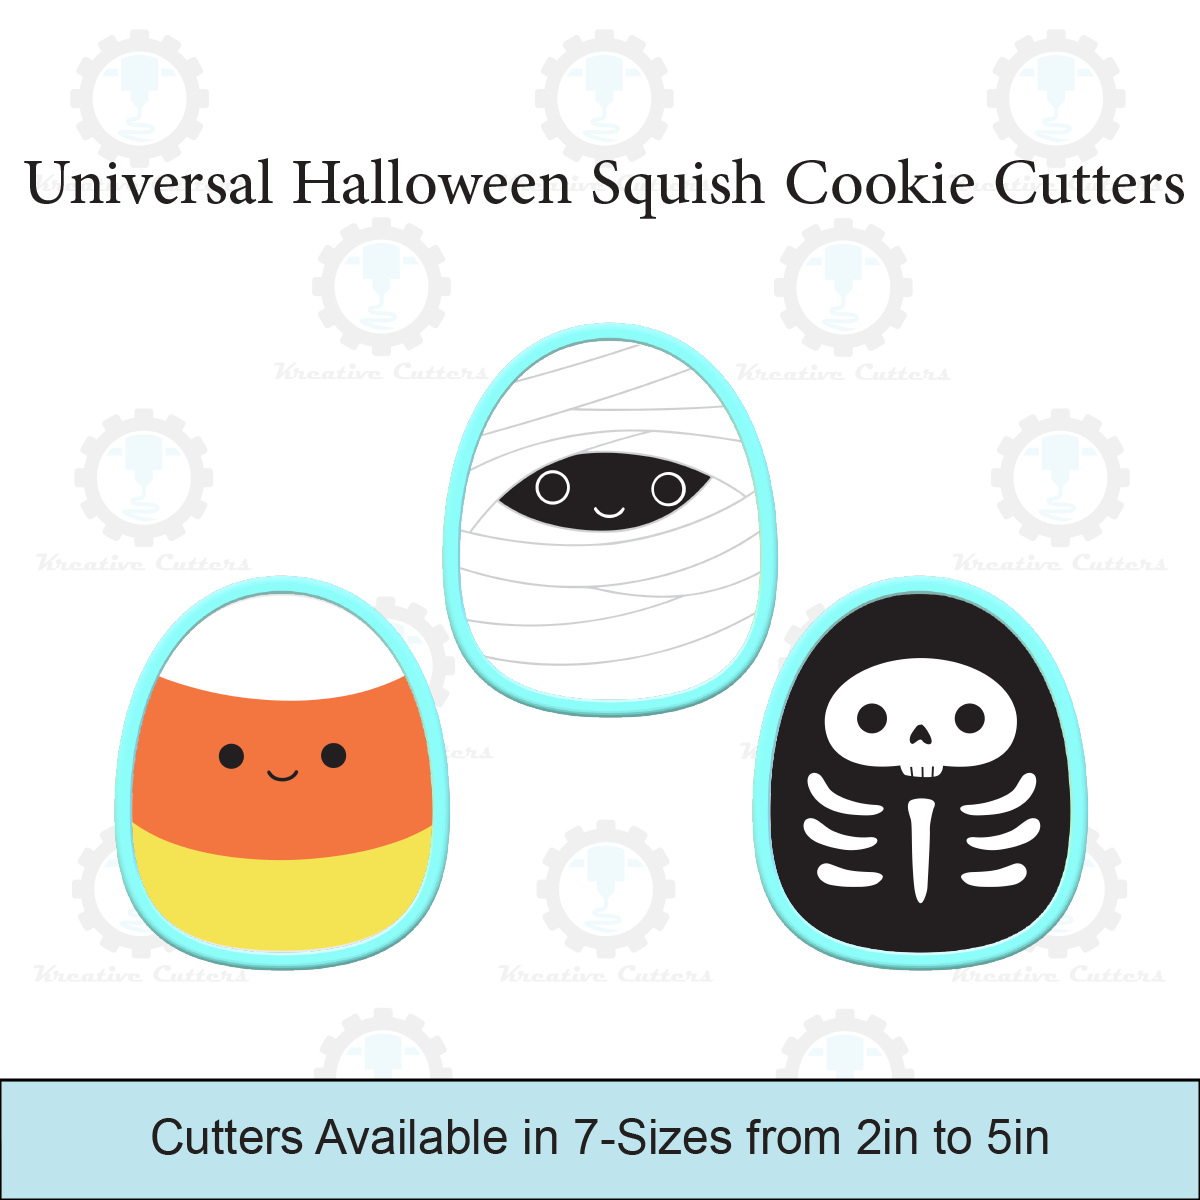 Universal Halloween Squish Cookie Cutters